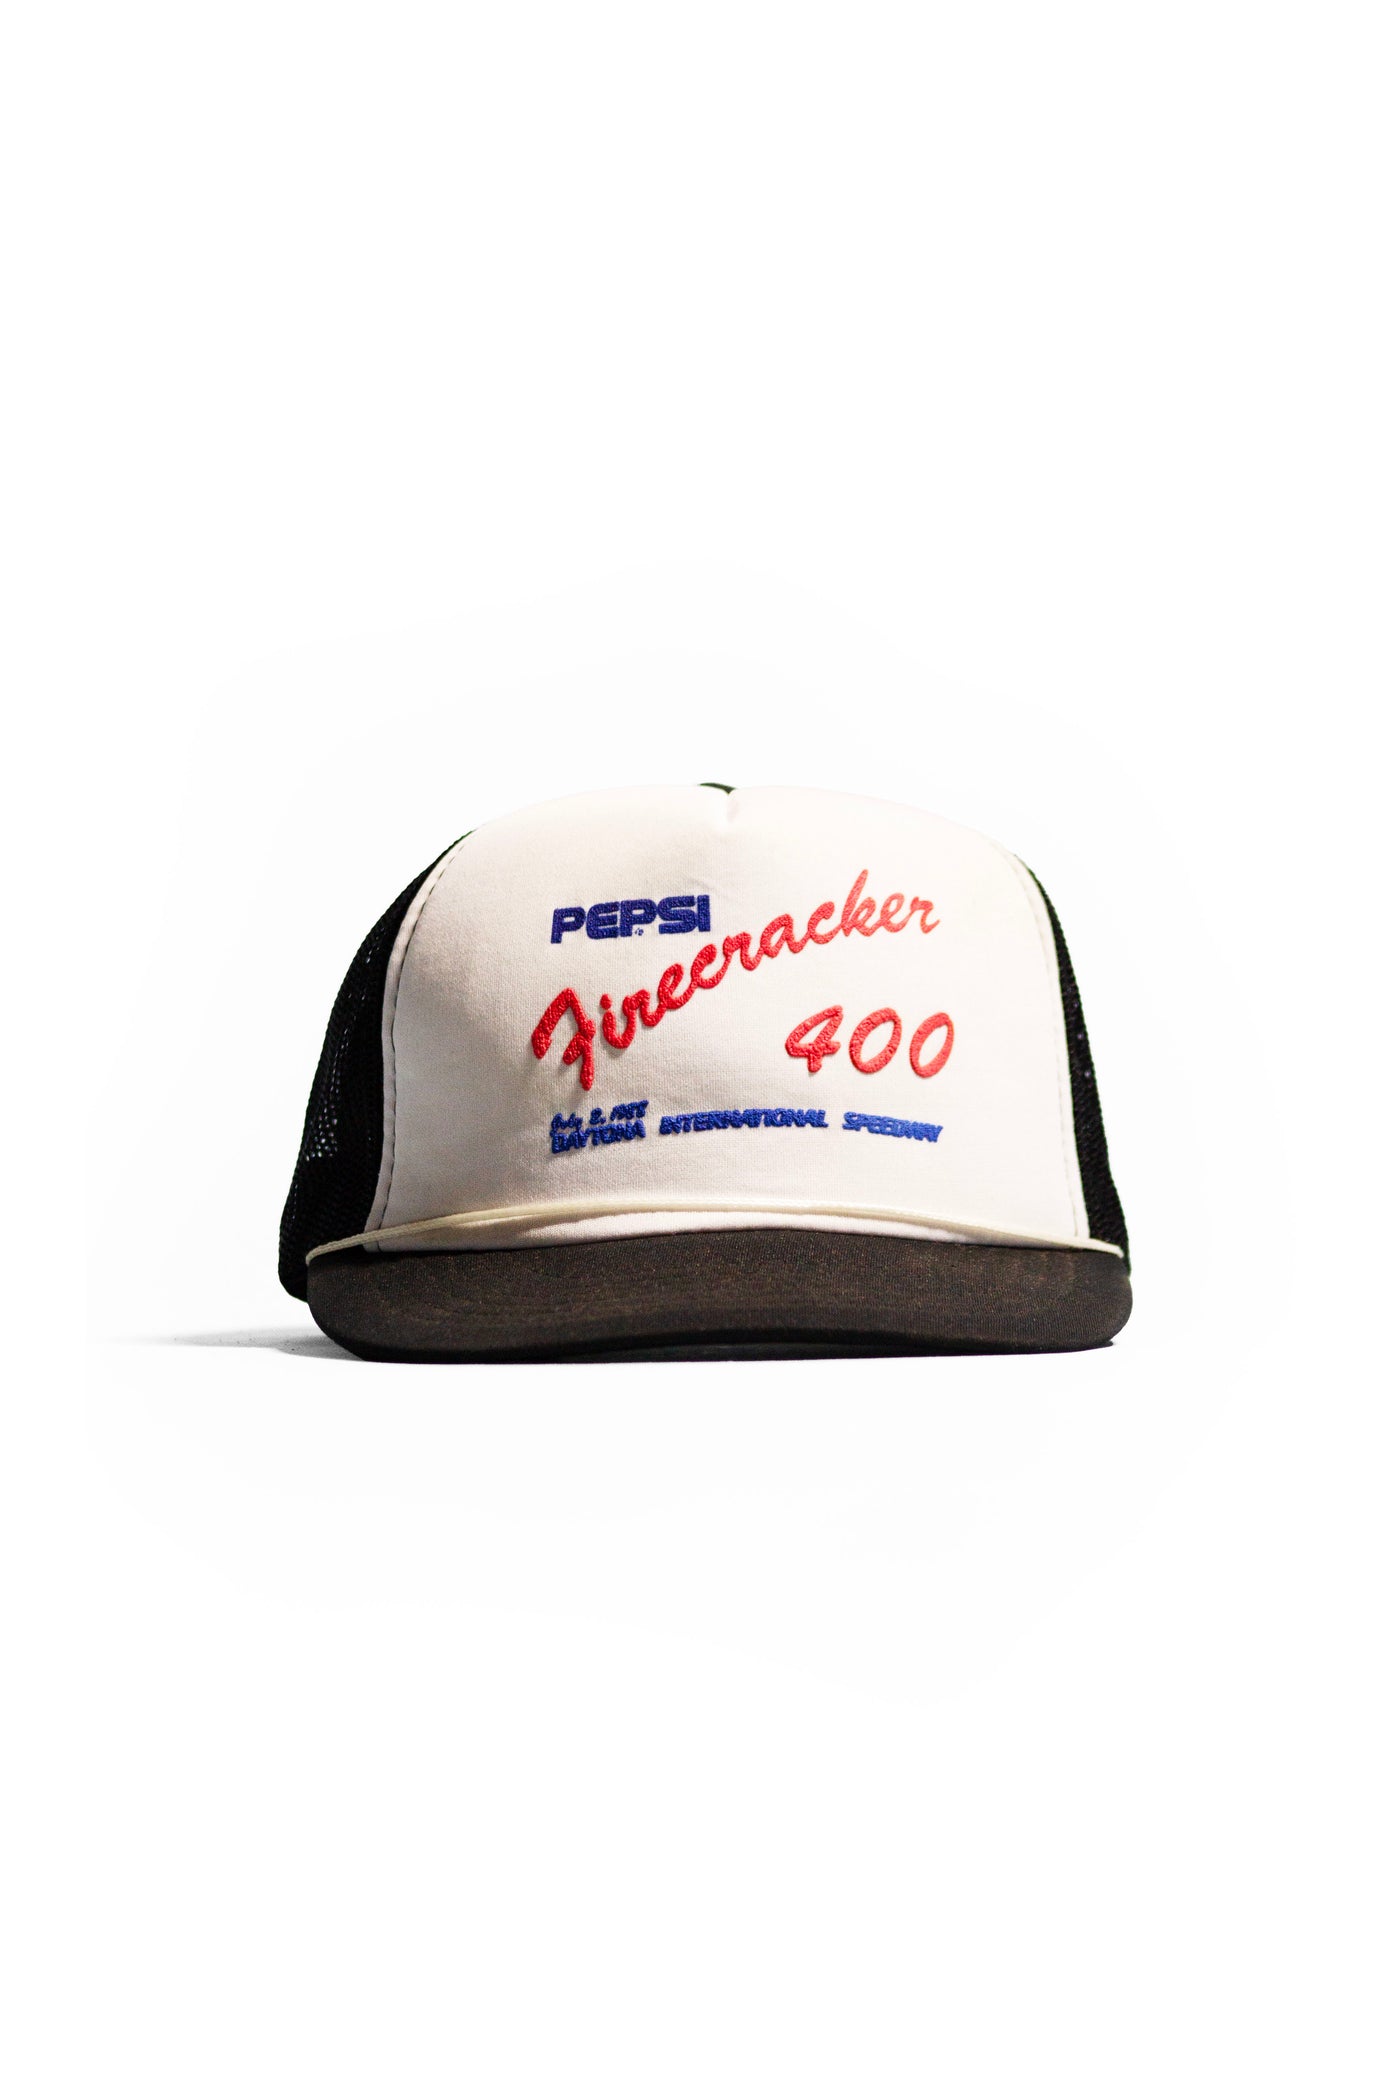 Vintage 1988 Pepsi Firecracker 400 Trucker Hat